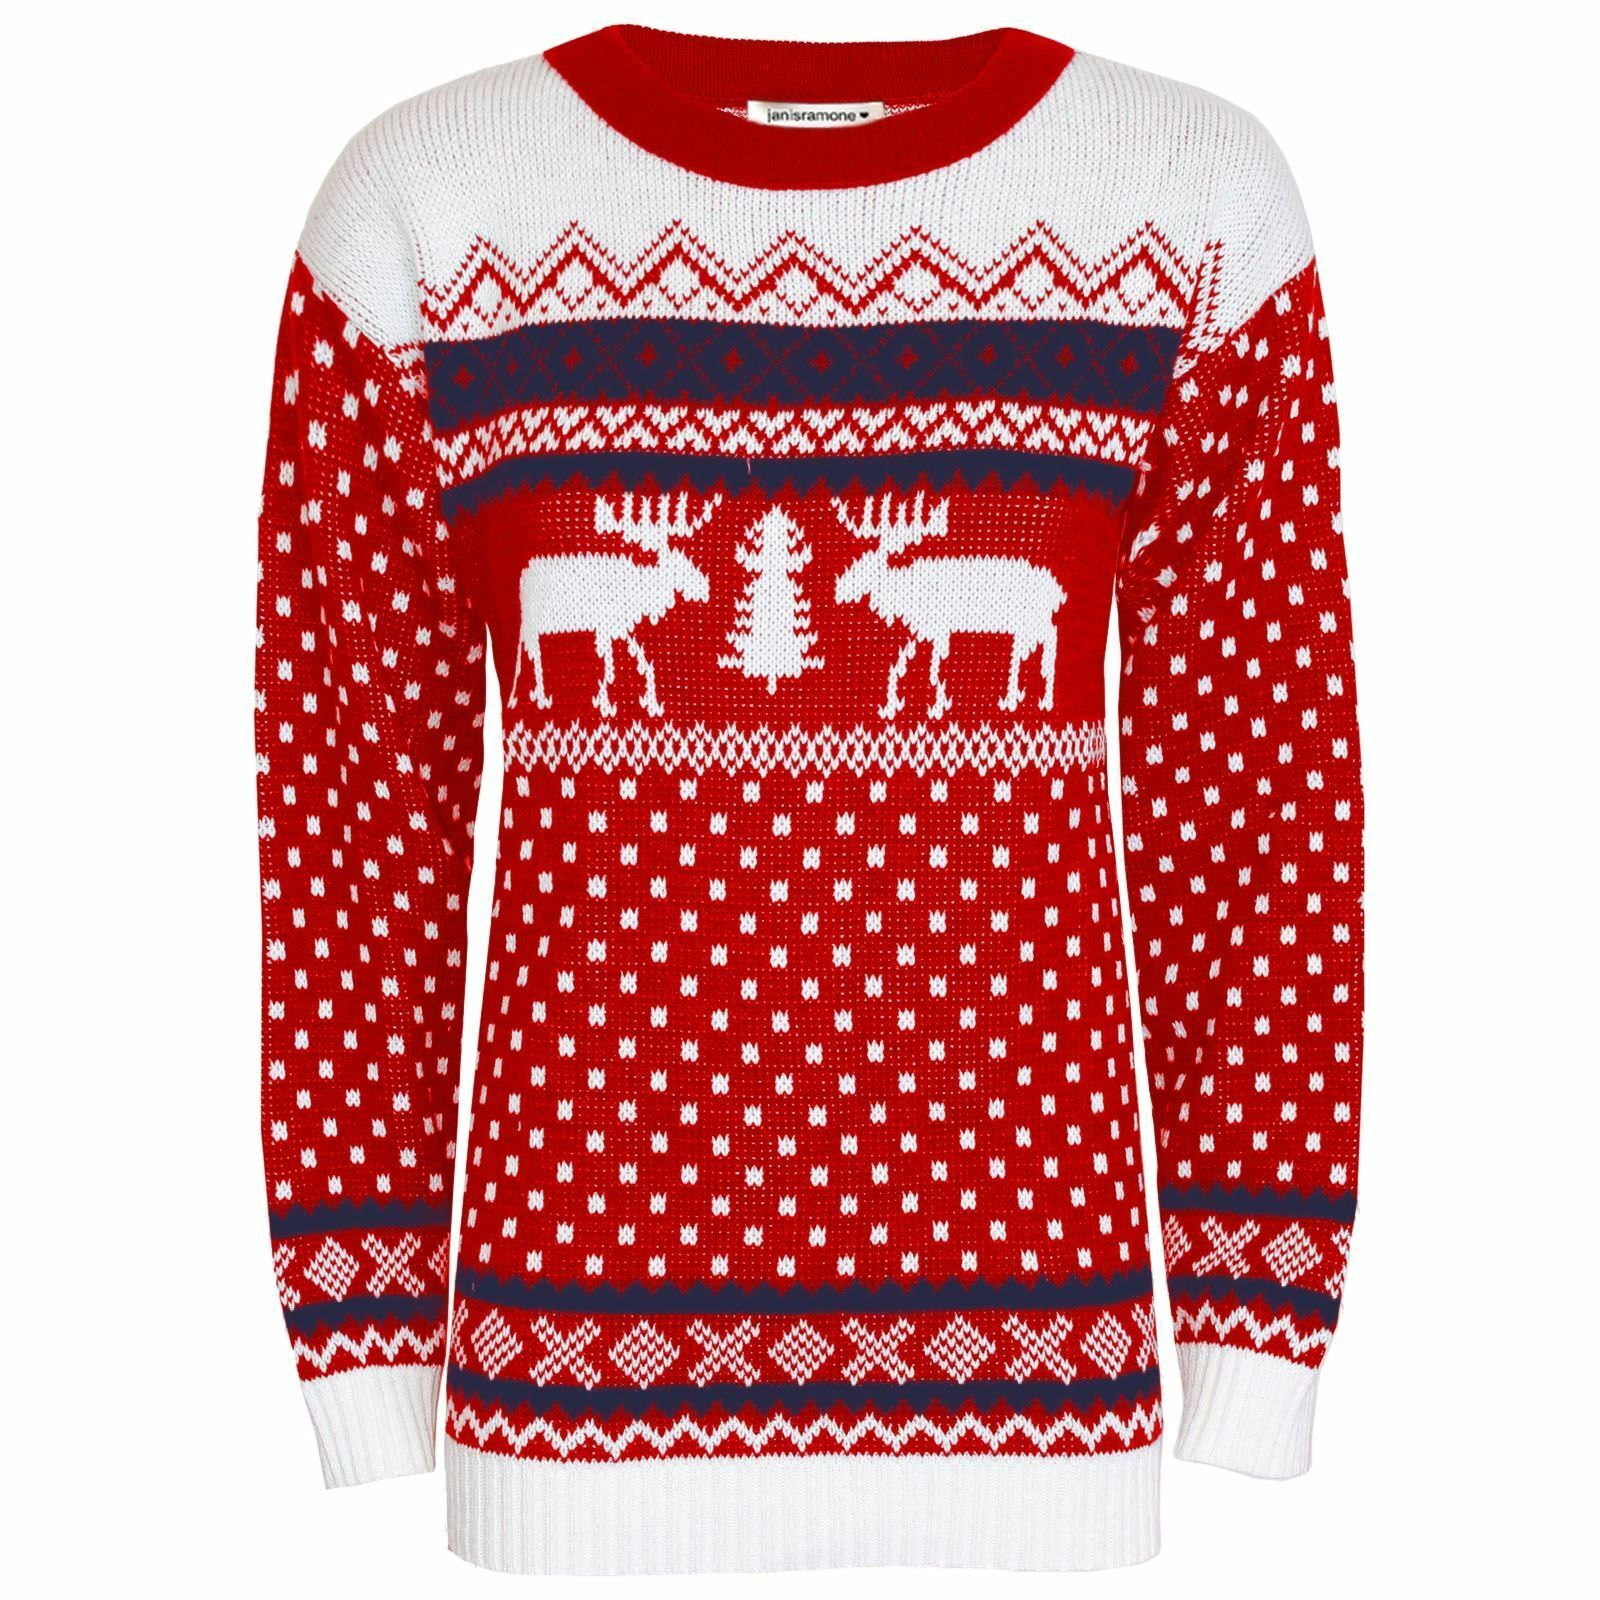 Retro Christmas Jumper Knitting Patterns Mens Christmas Reindeer Vintage Jumper Boys Warm Sweater Knitted Casual Xmas Uk